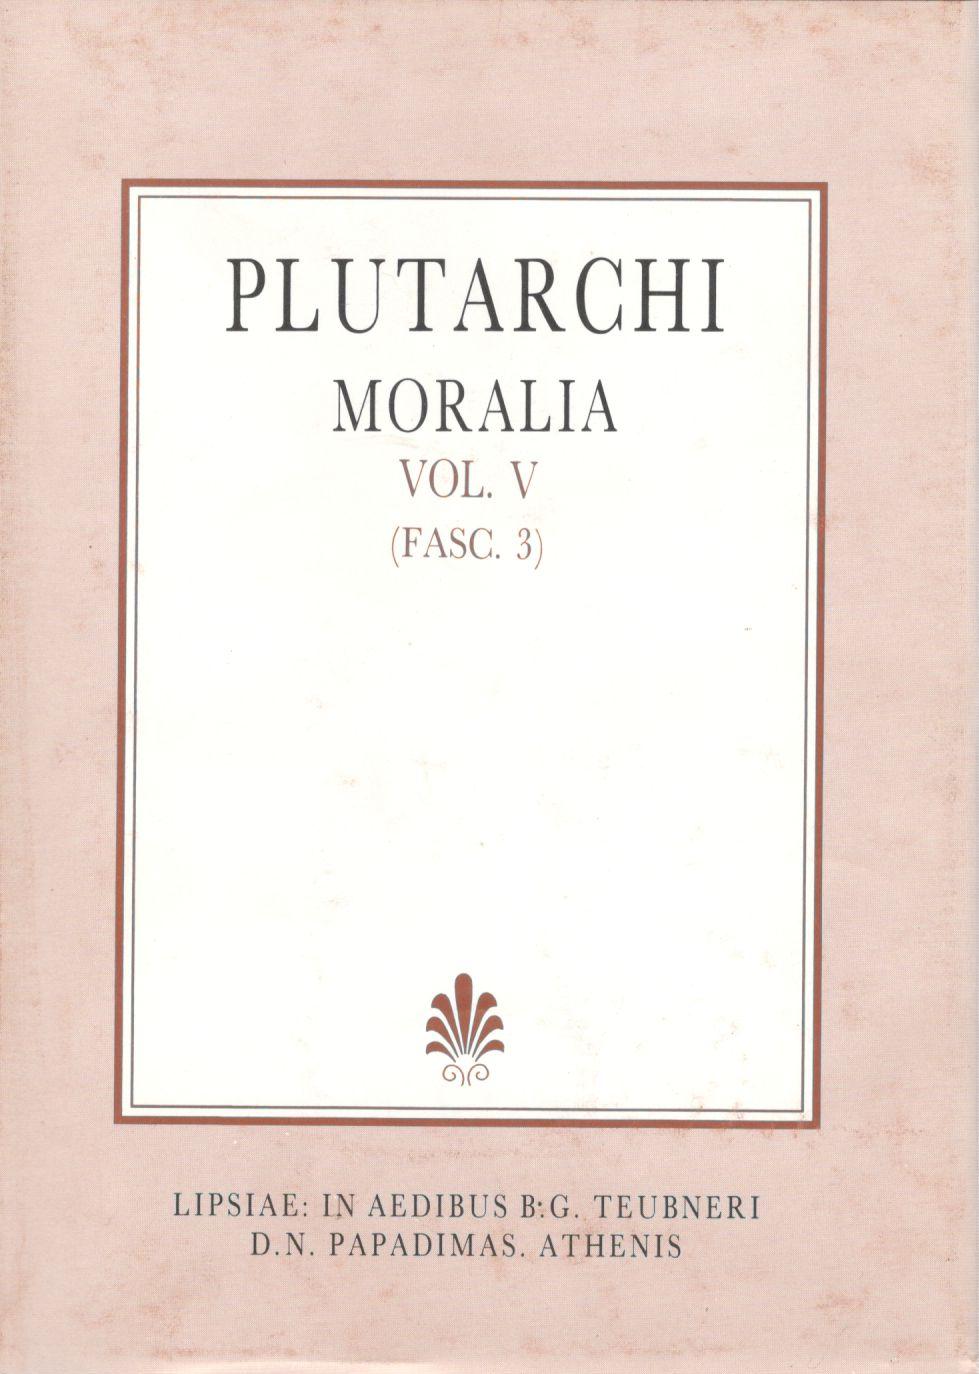 Plutarchi Moralia, Vol. V, (Fasc. 3), [Πλουτάρχου, Ηθικά, τ. Ε', (τεύχ. 3)]